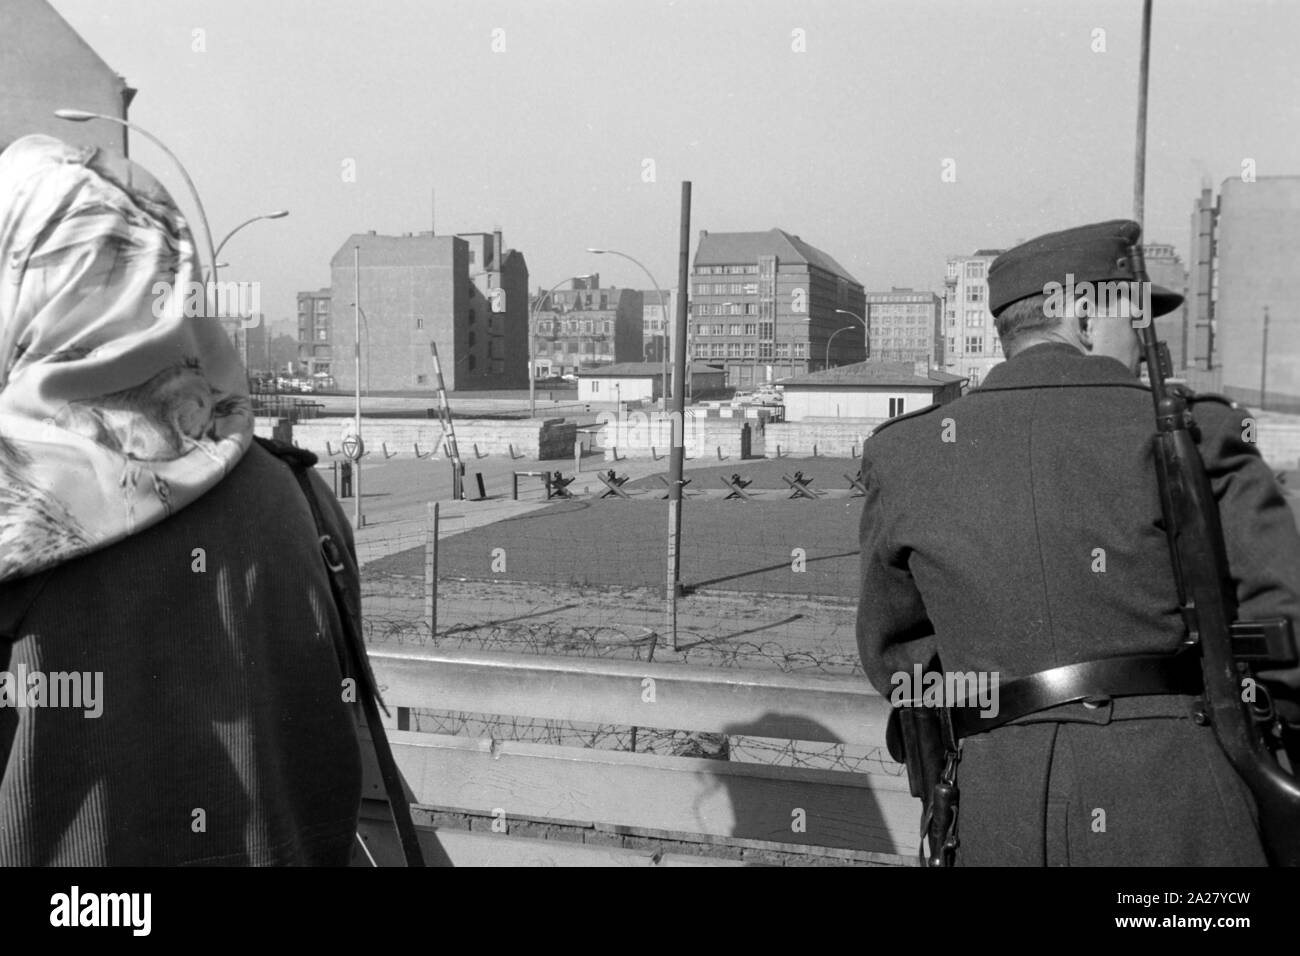 Menschen am Potsdamer Platz in Berlin, Deutschland 1963. People at Potsdamer Platz square in Berlin, Germany 1963. Stock Photo